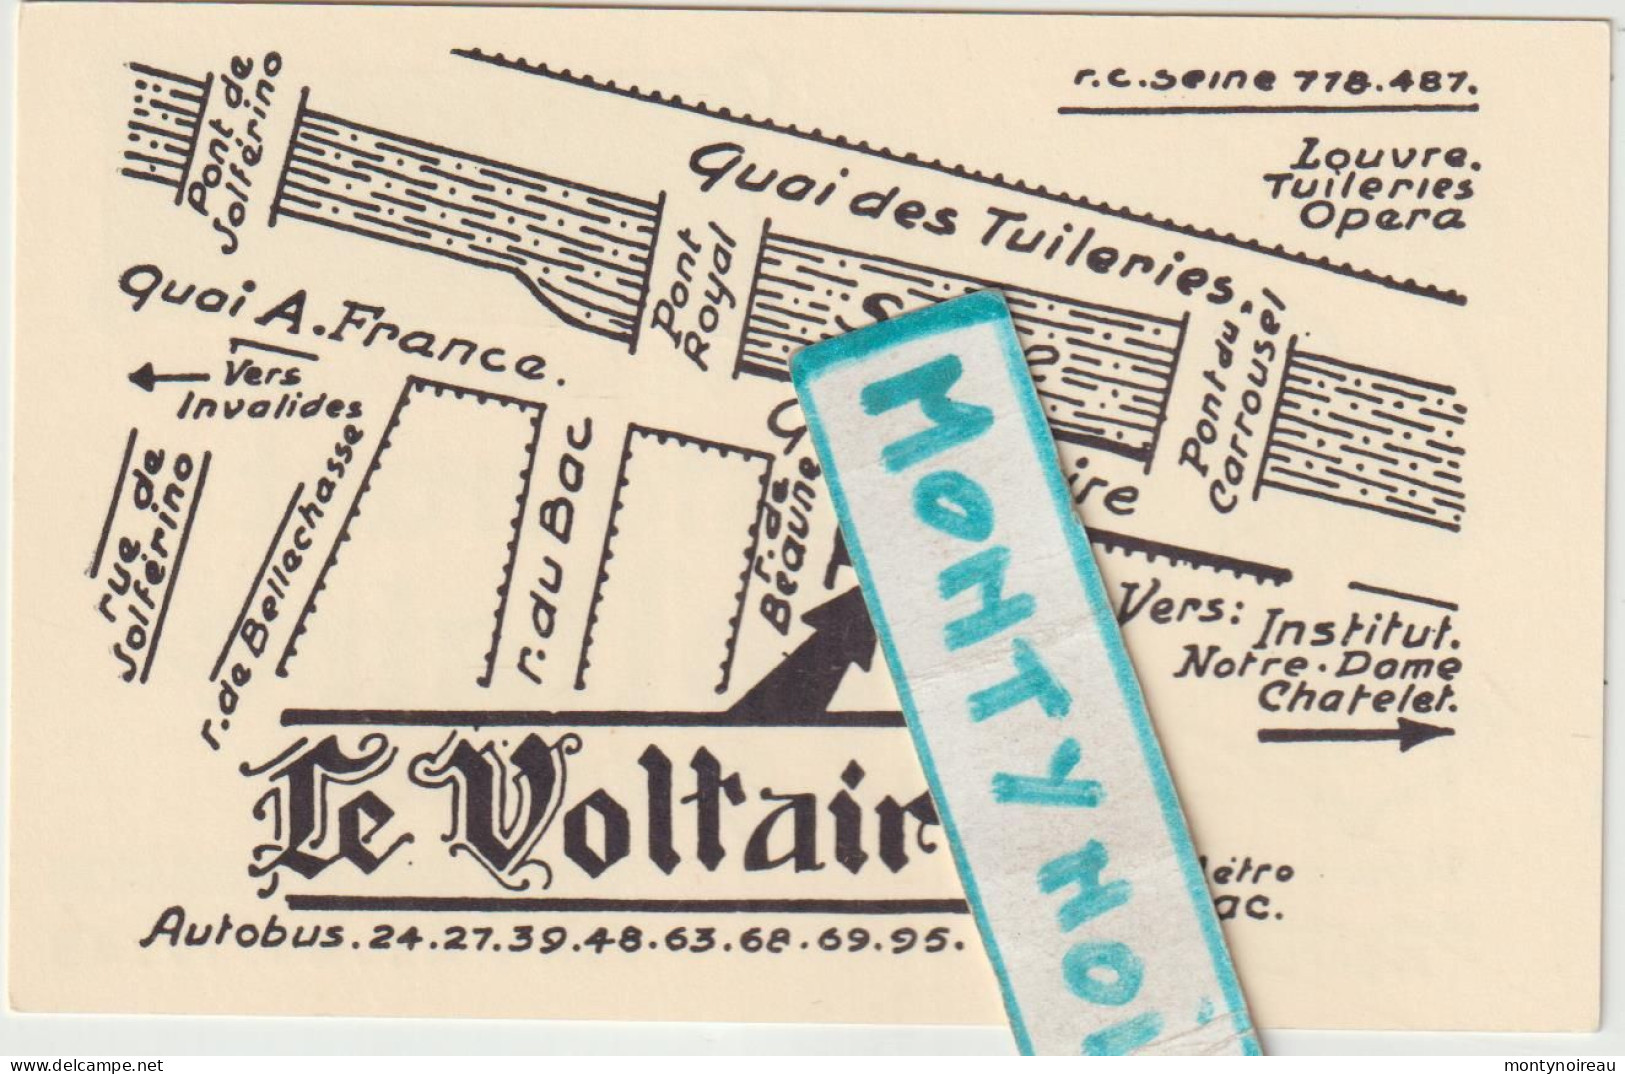 VP : Carte De Visite : Restaurant Le  Voltaire , Paris 7  Em - Cartoncini Da Visita